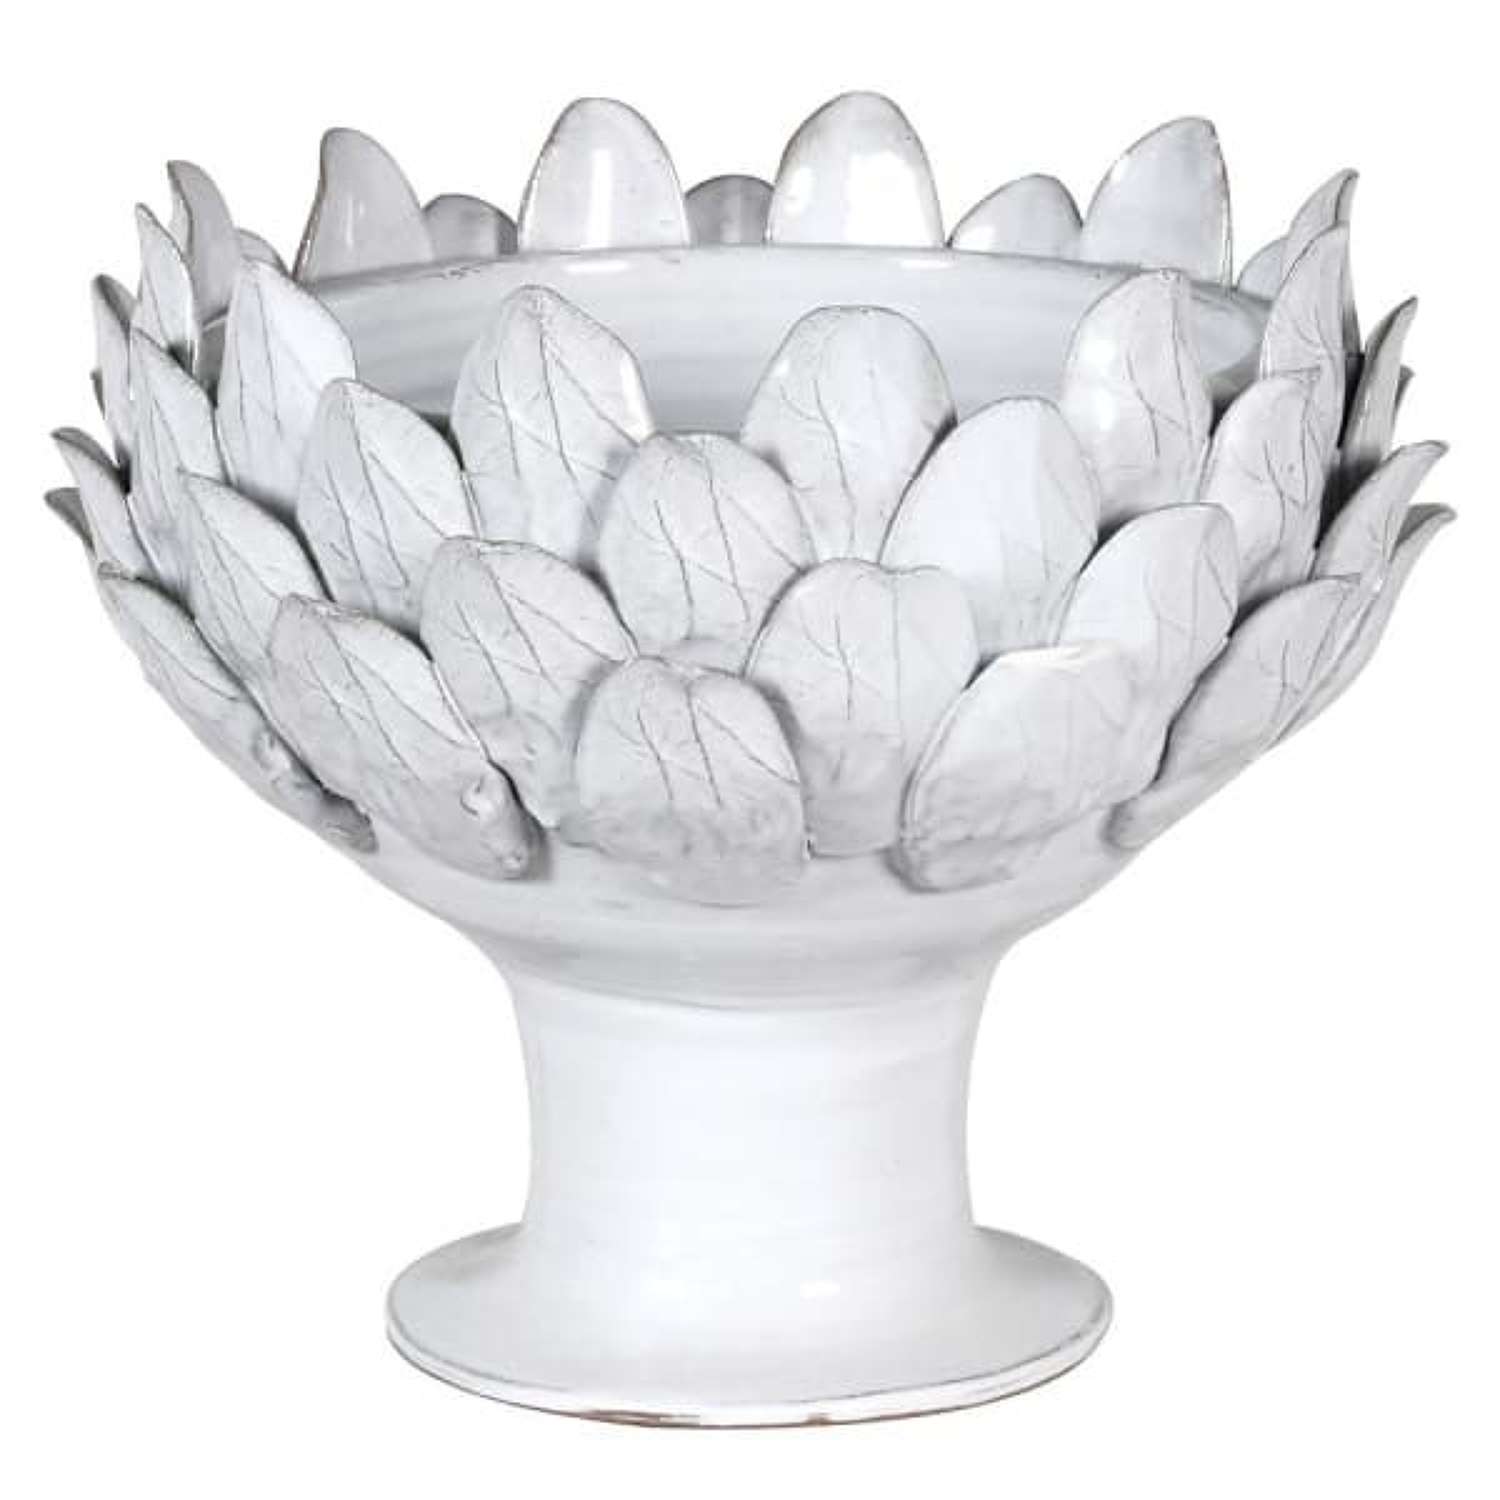 White Ceramic Artichoke Bowl